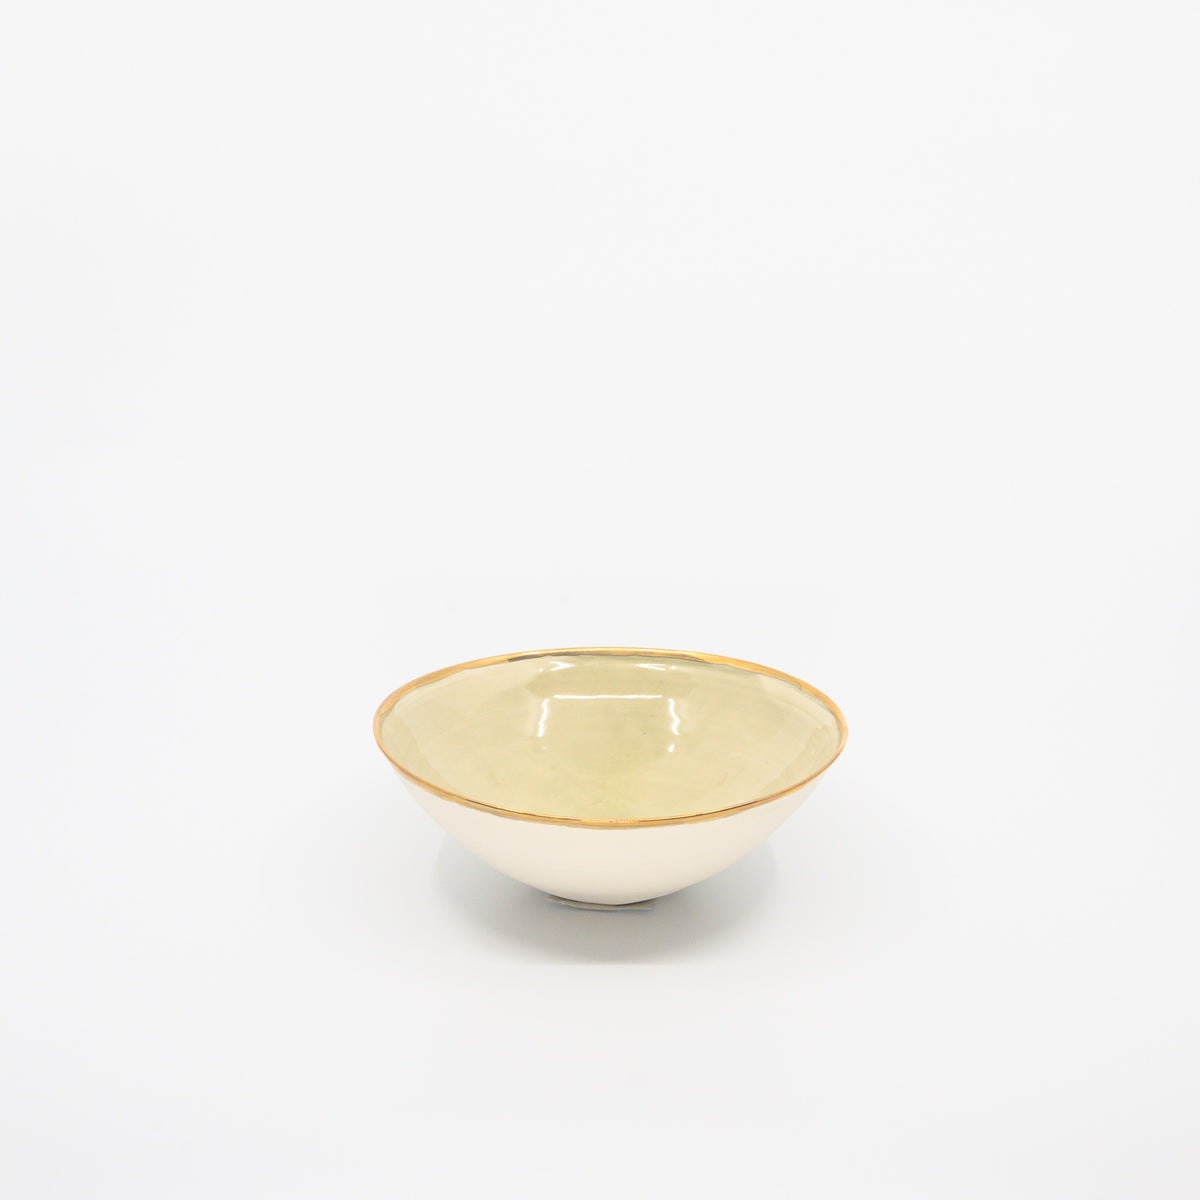 Porcelain bowl with gold rim